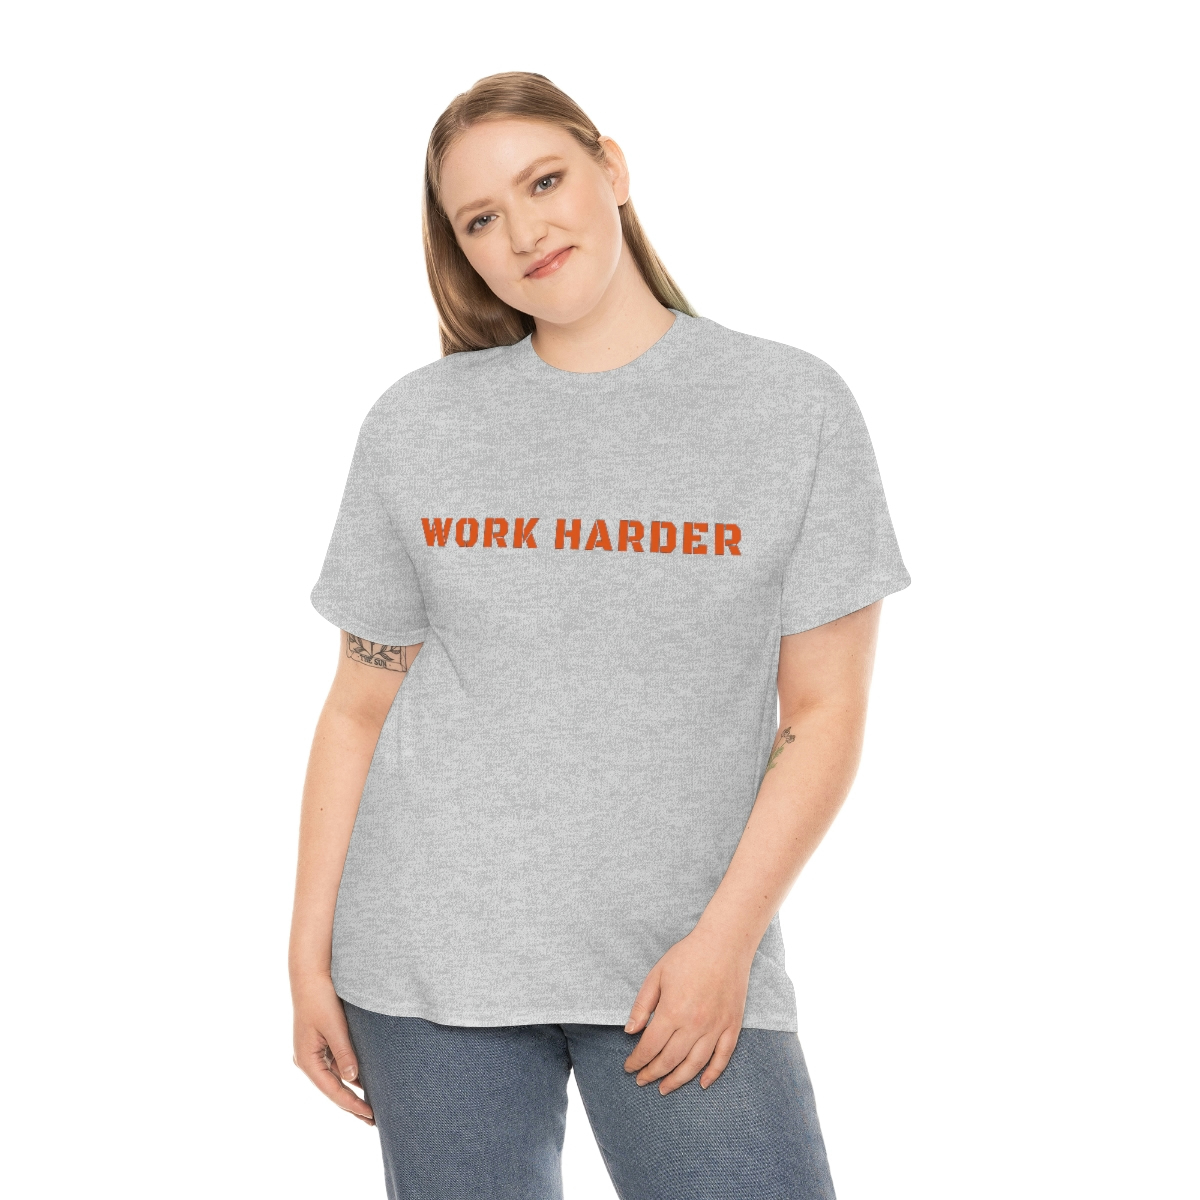 Work Harder Tee Shirt